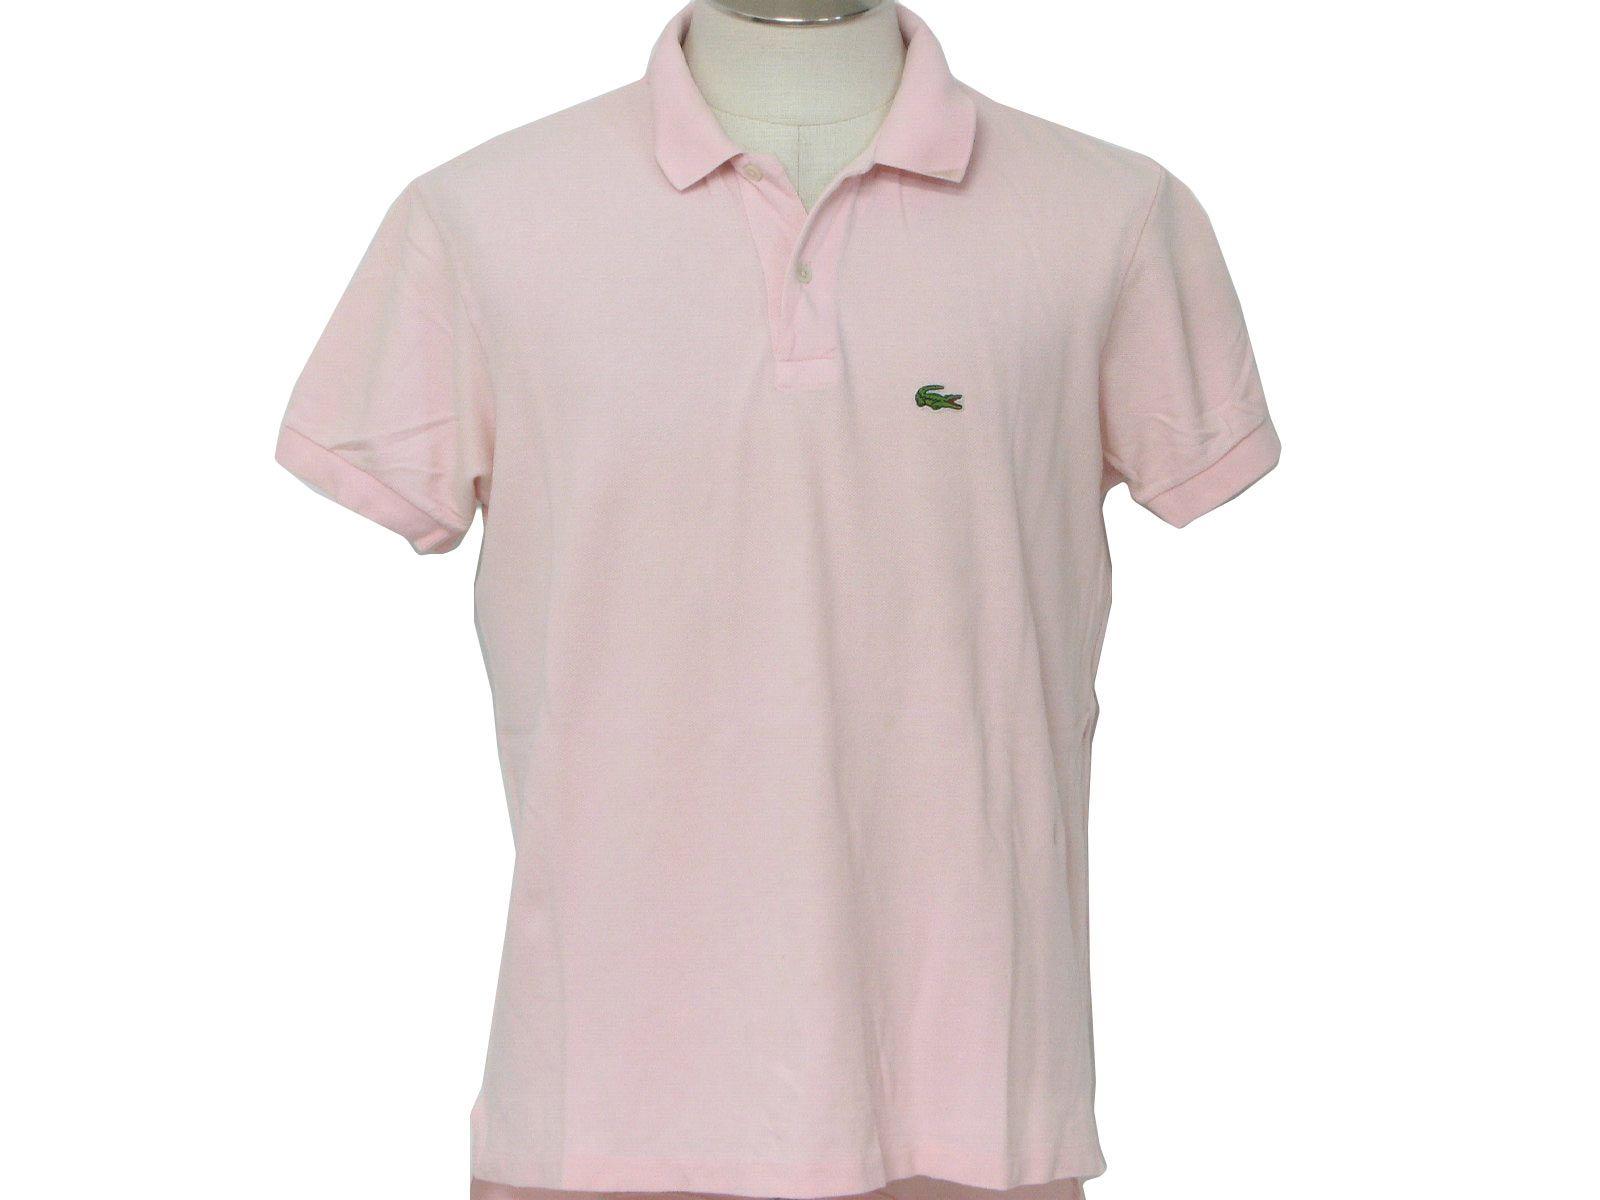 Izod Shirt Logo - Vintage Izod Lacoste 80's Shirt: 80s -Izod Lacoste- Mens pink woven ...